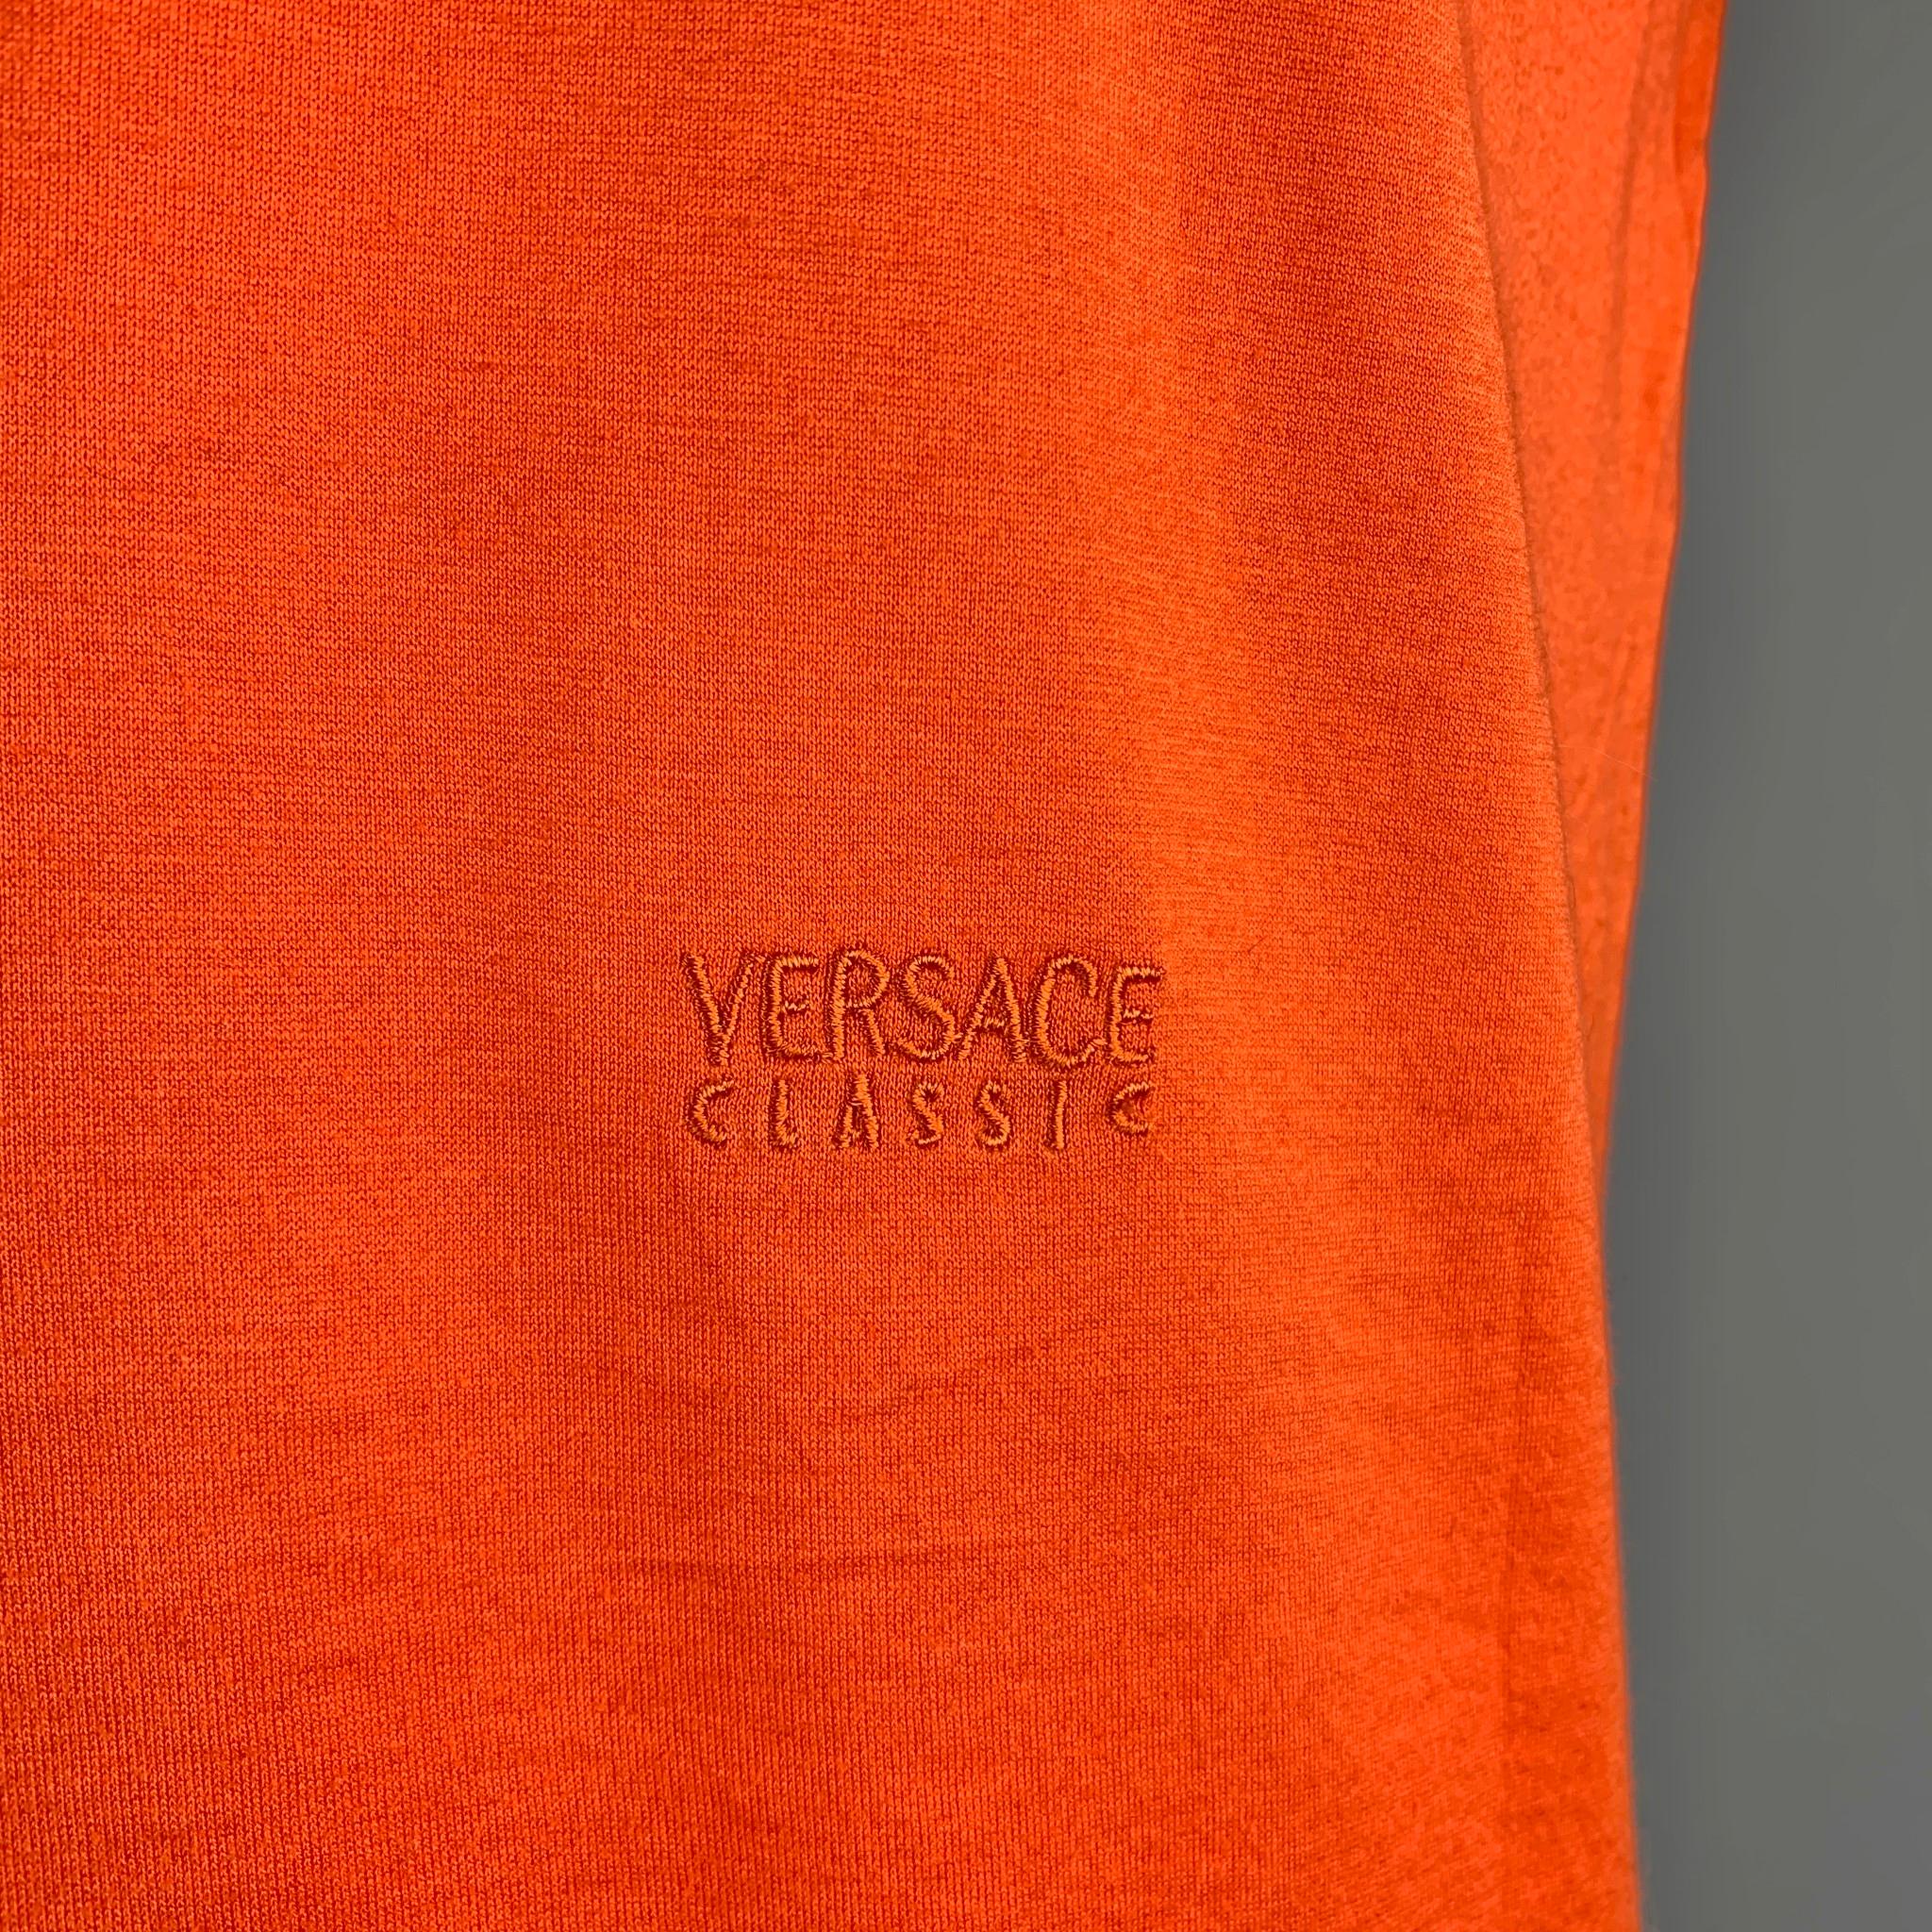 versace classic v2 polo